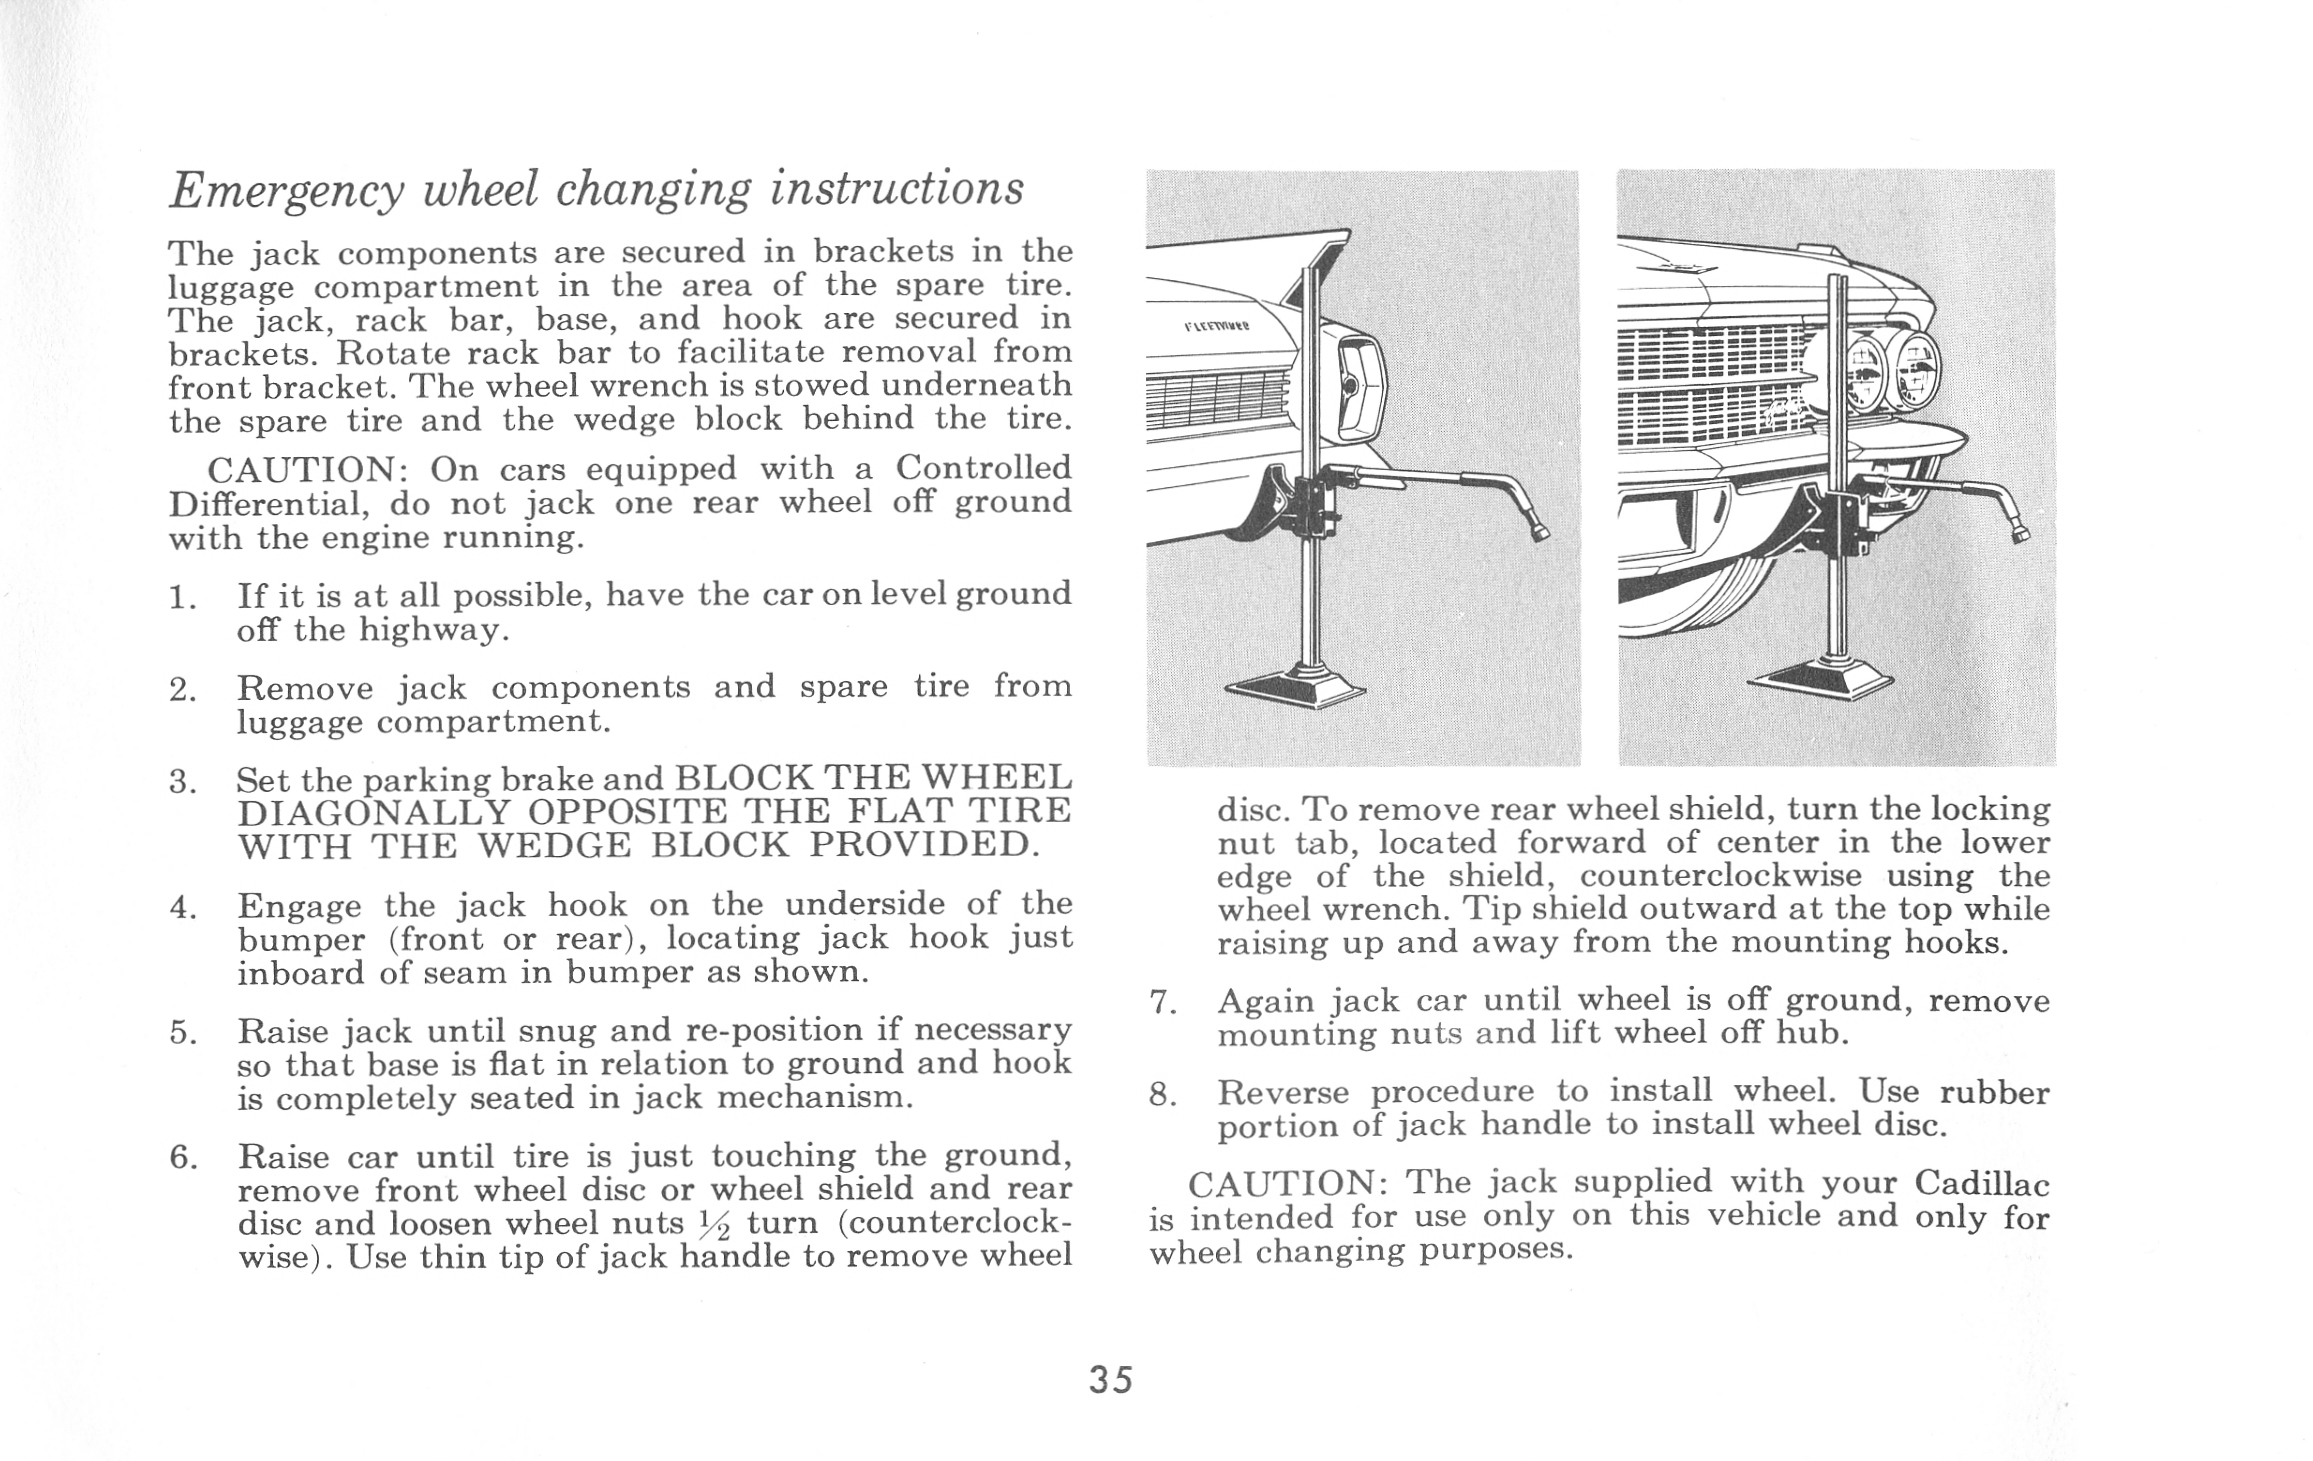 n_1962 Cadillac Owner's Manual-Page 35.jpg